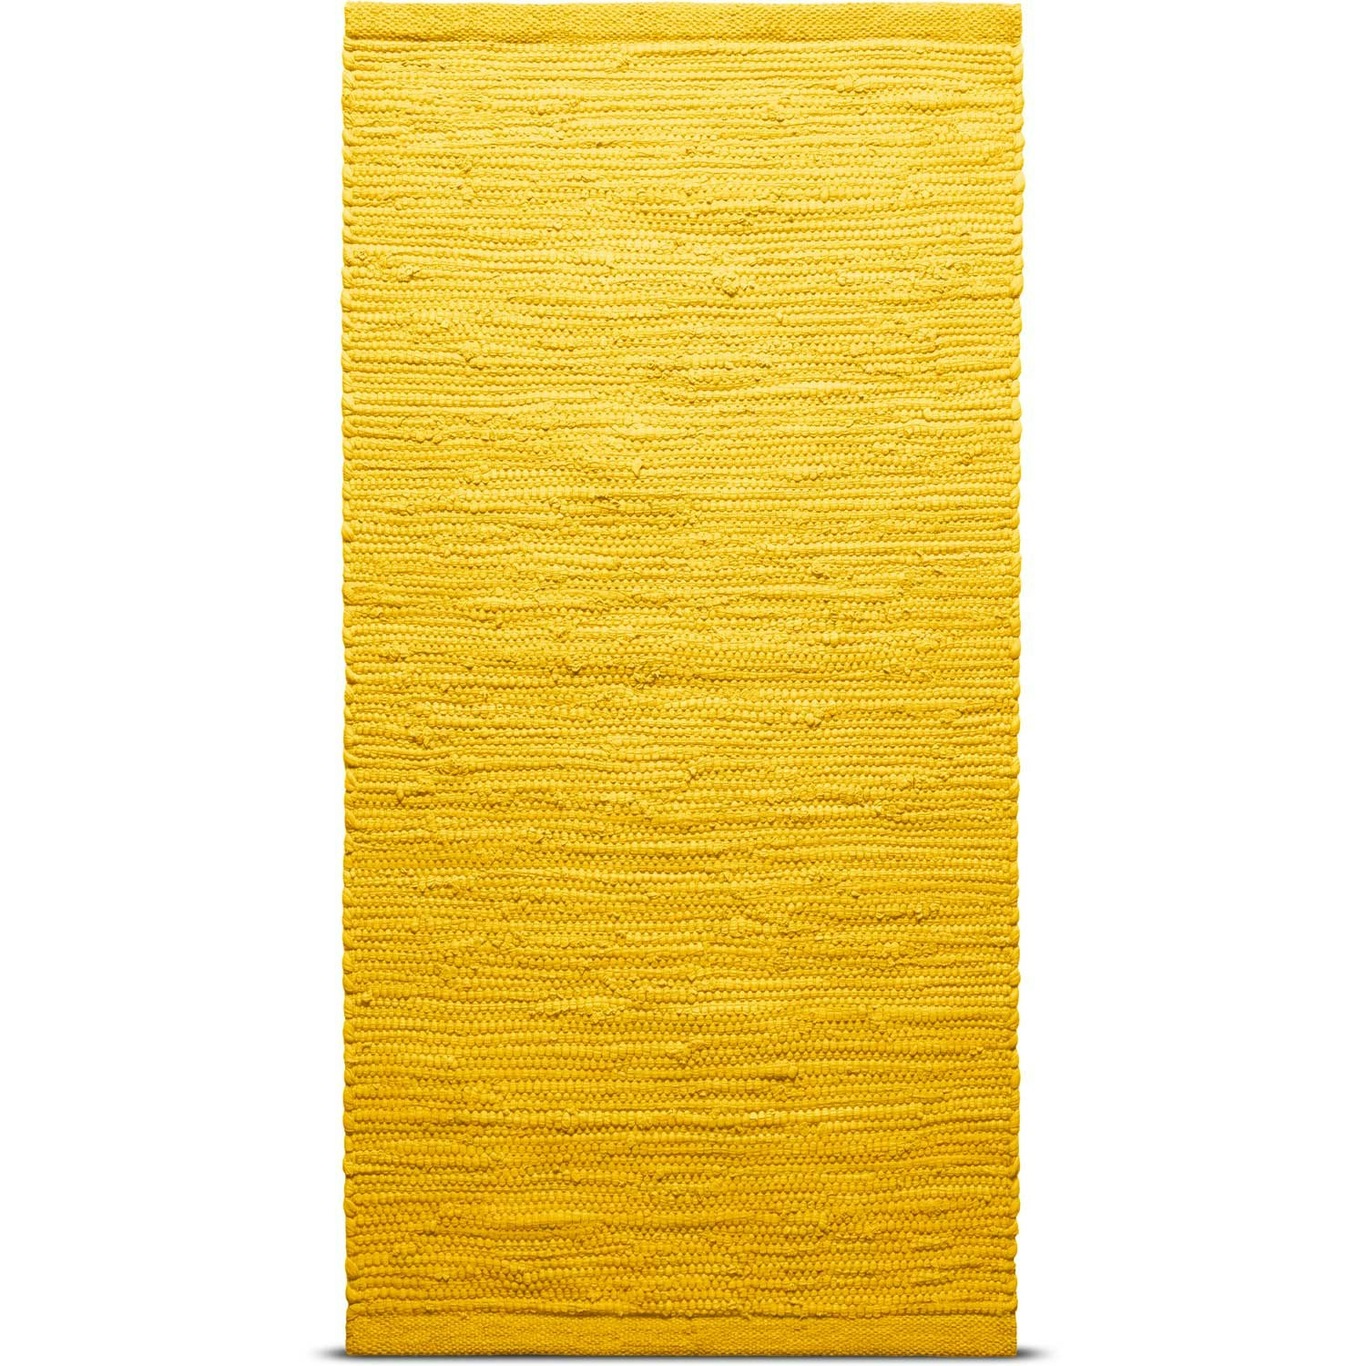 https://royaldesign.com/image/2/rug-solid-cotton-rug-raincoat-yellow-11?w=800&quality=80